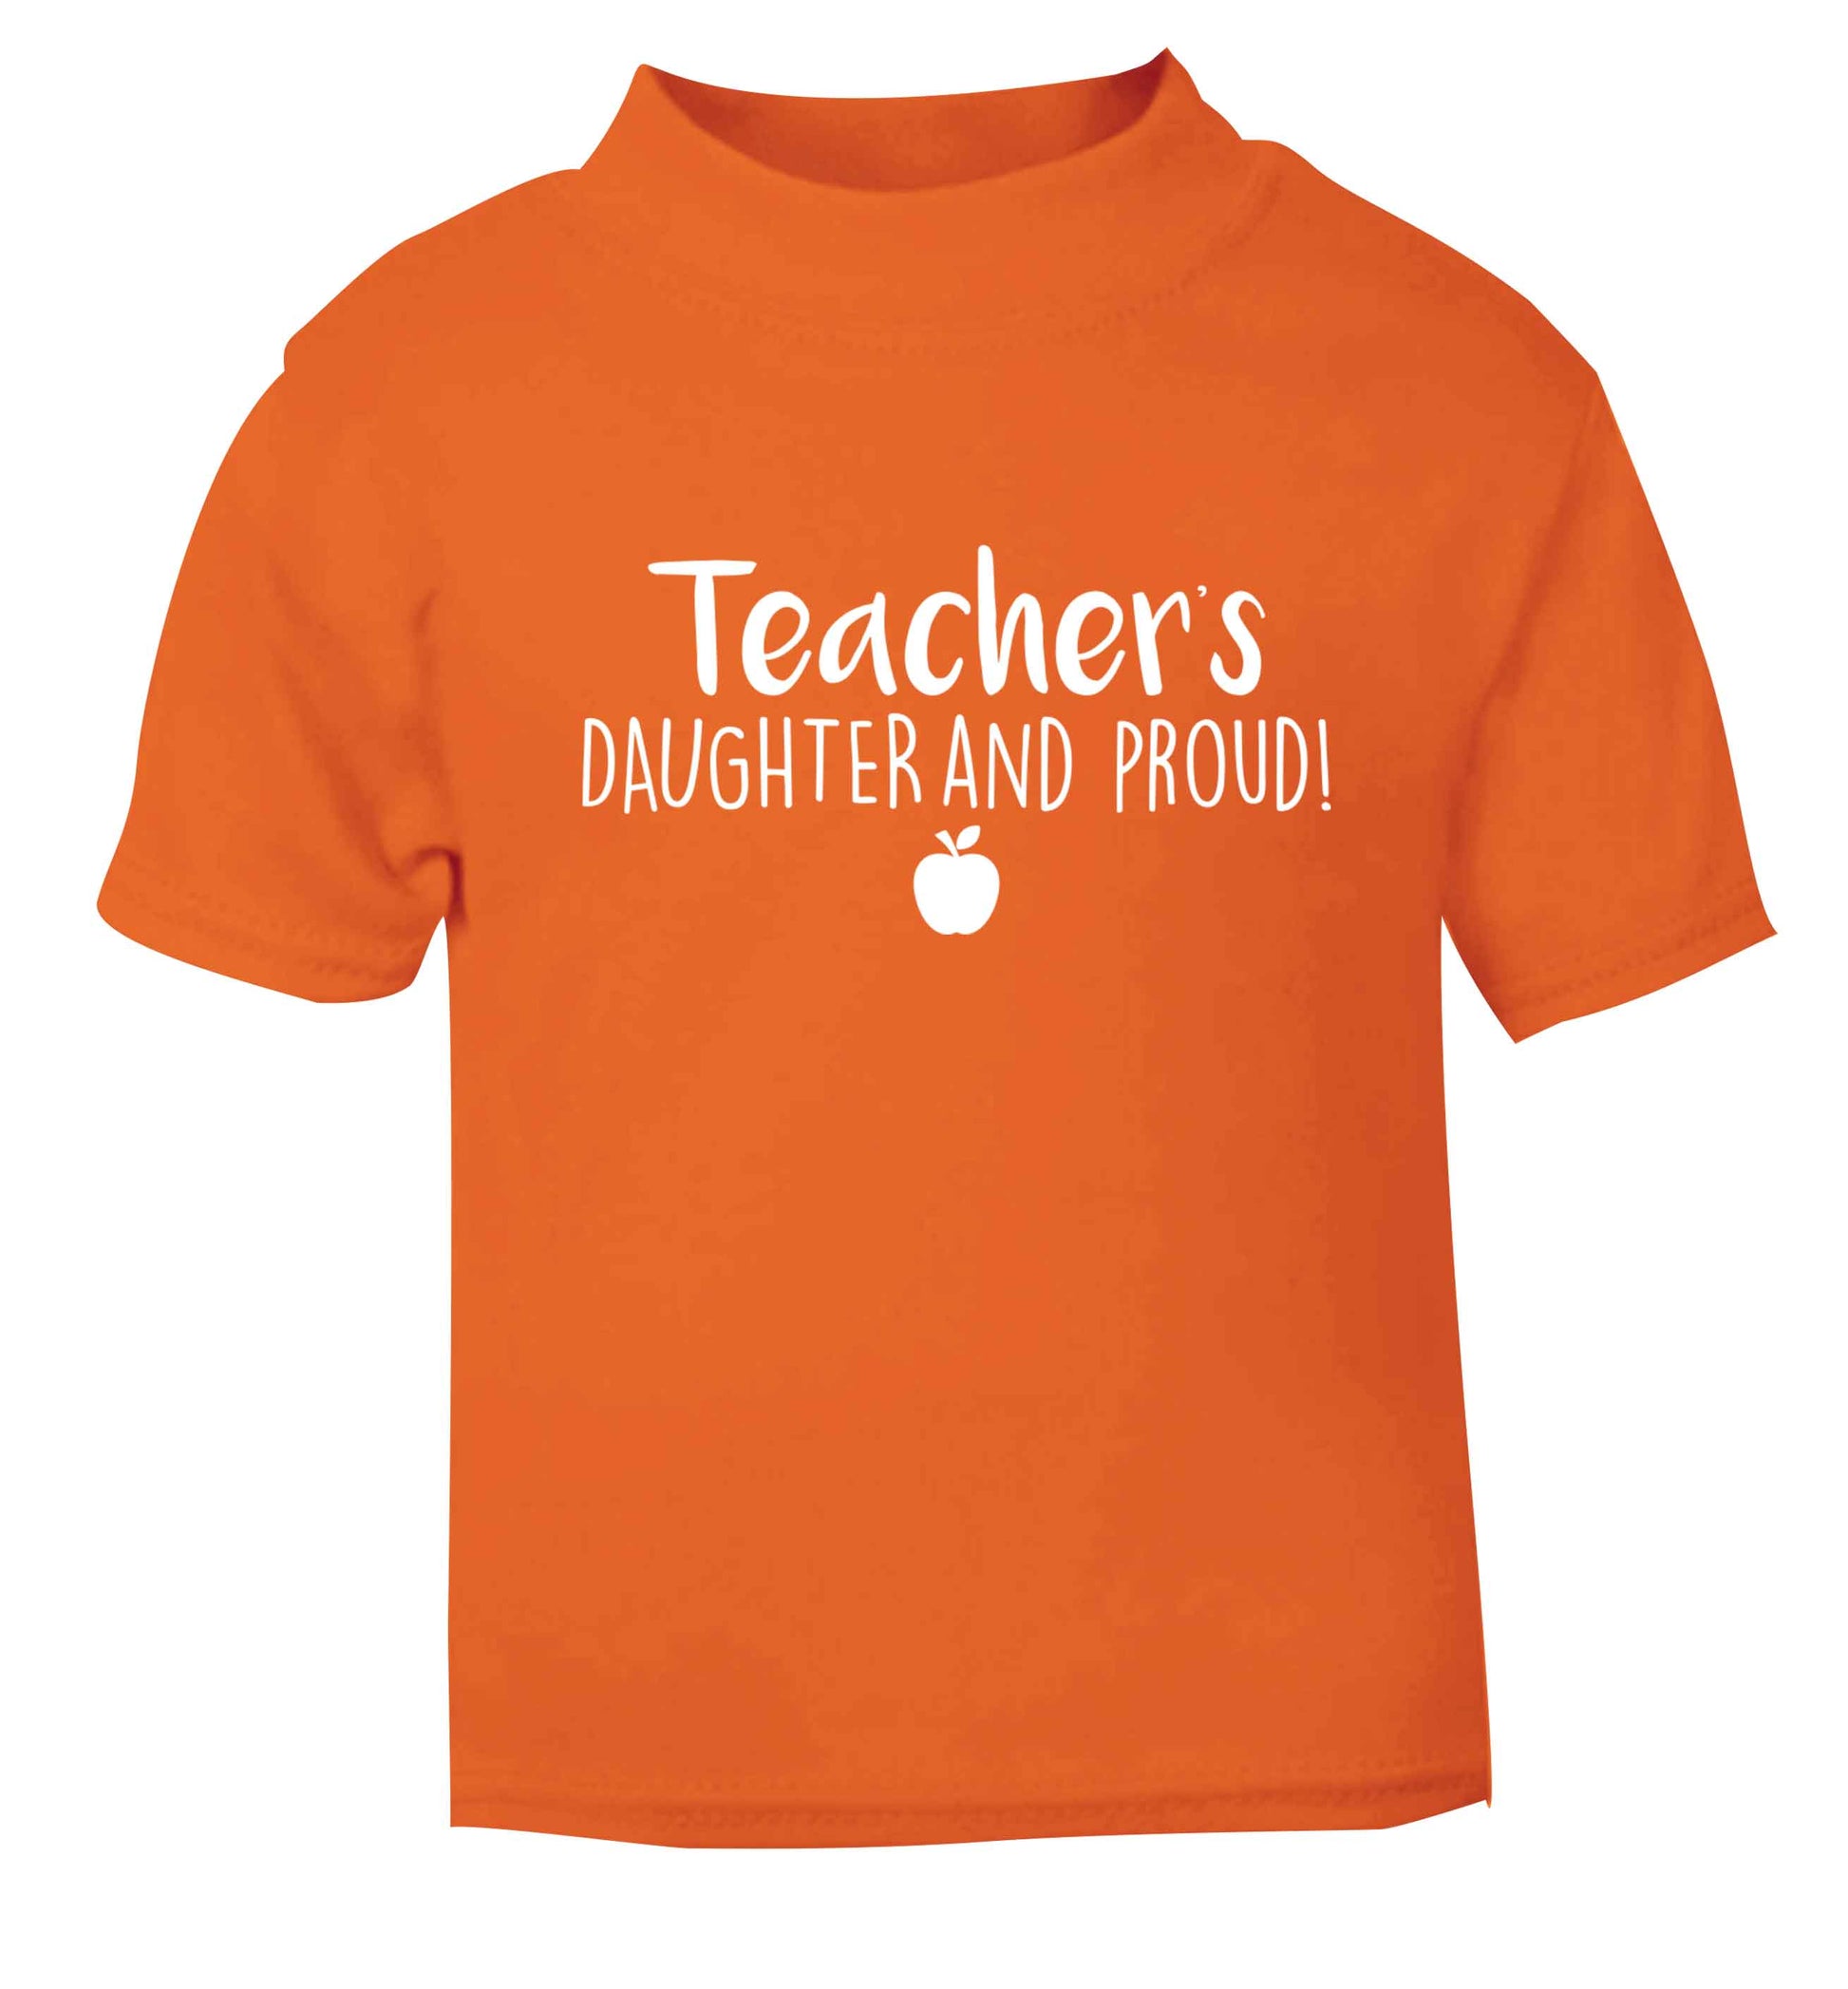 Teachers daughter and proud orange baby toddler Tshirt 2 Years